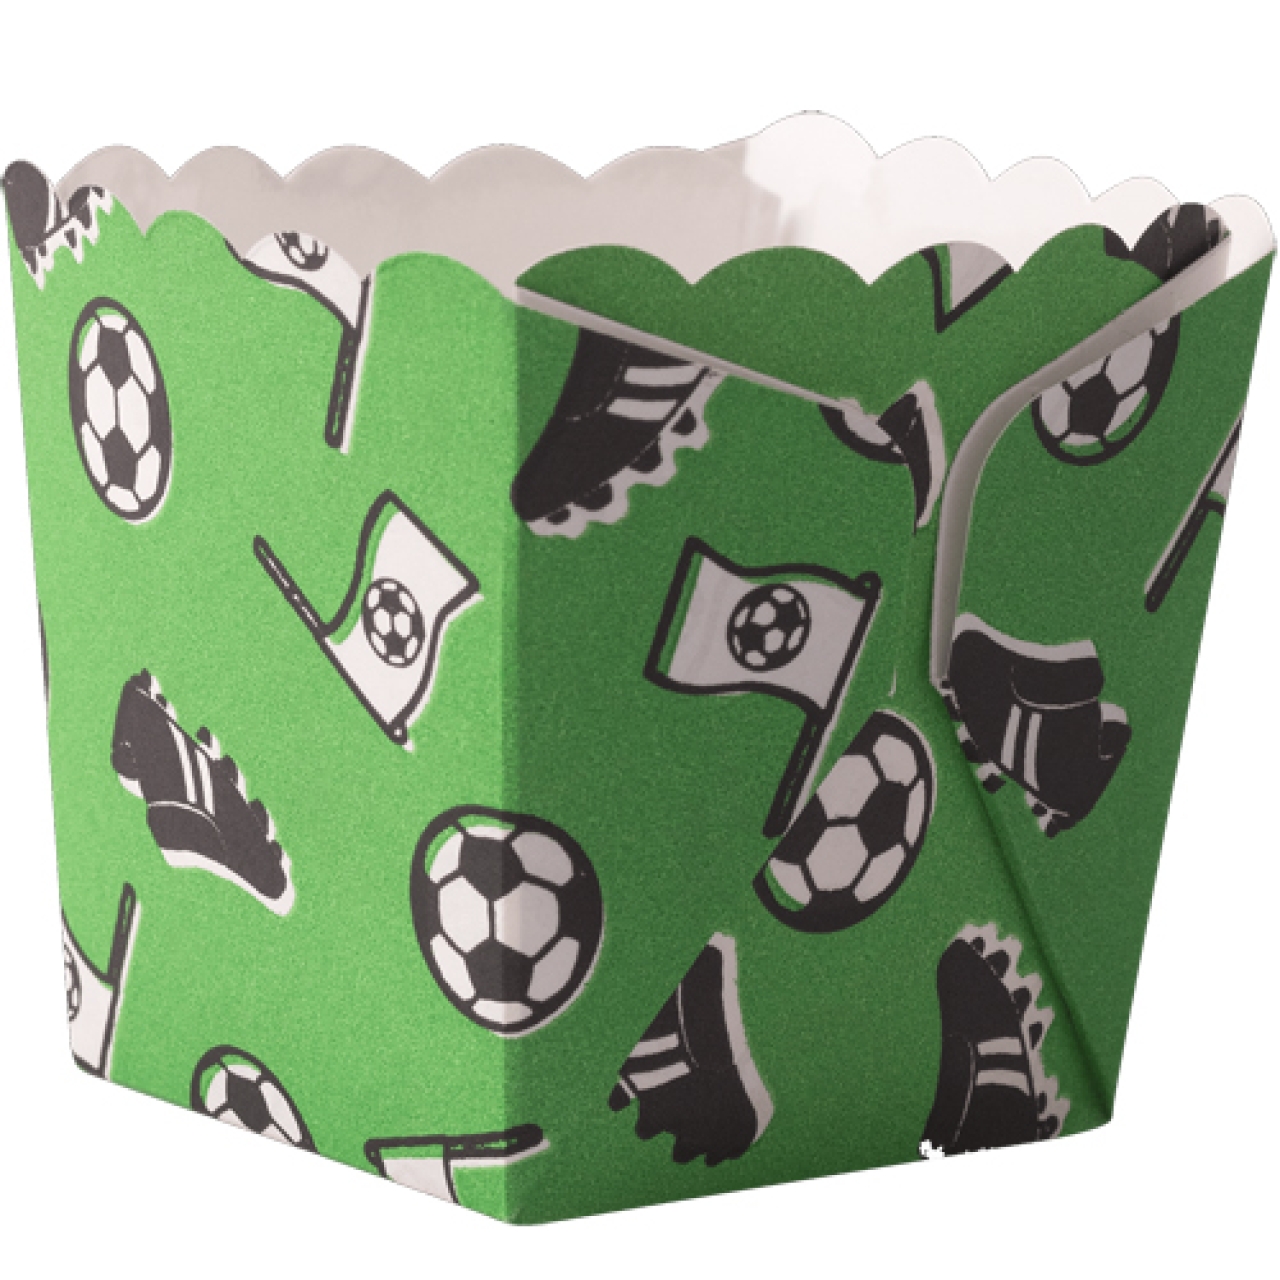 Papierförmchen für Snacks, Mini Snackbox "Fußball", 12 Stück